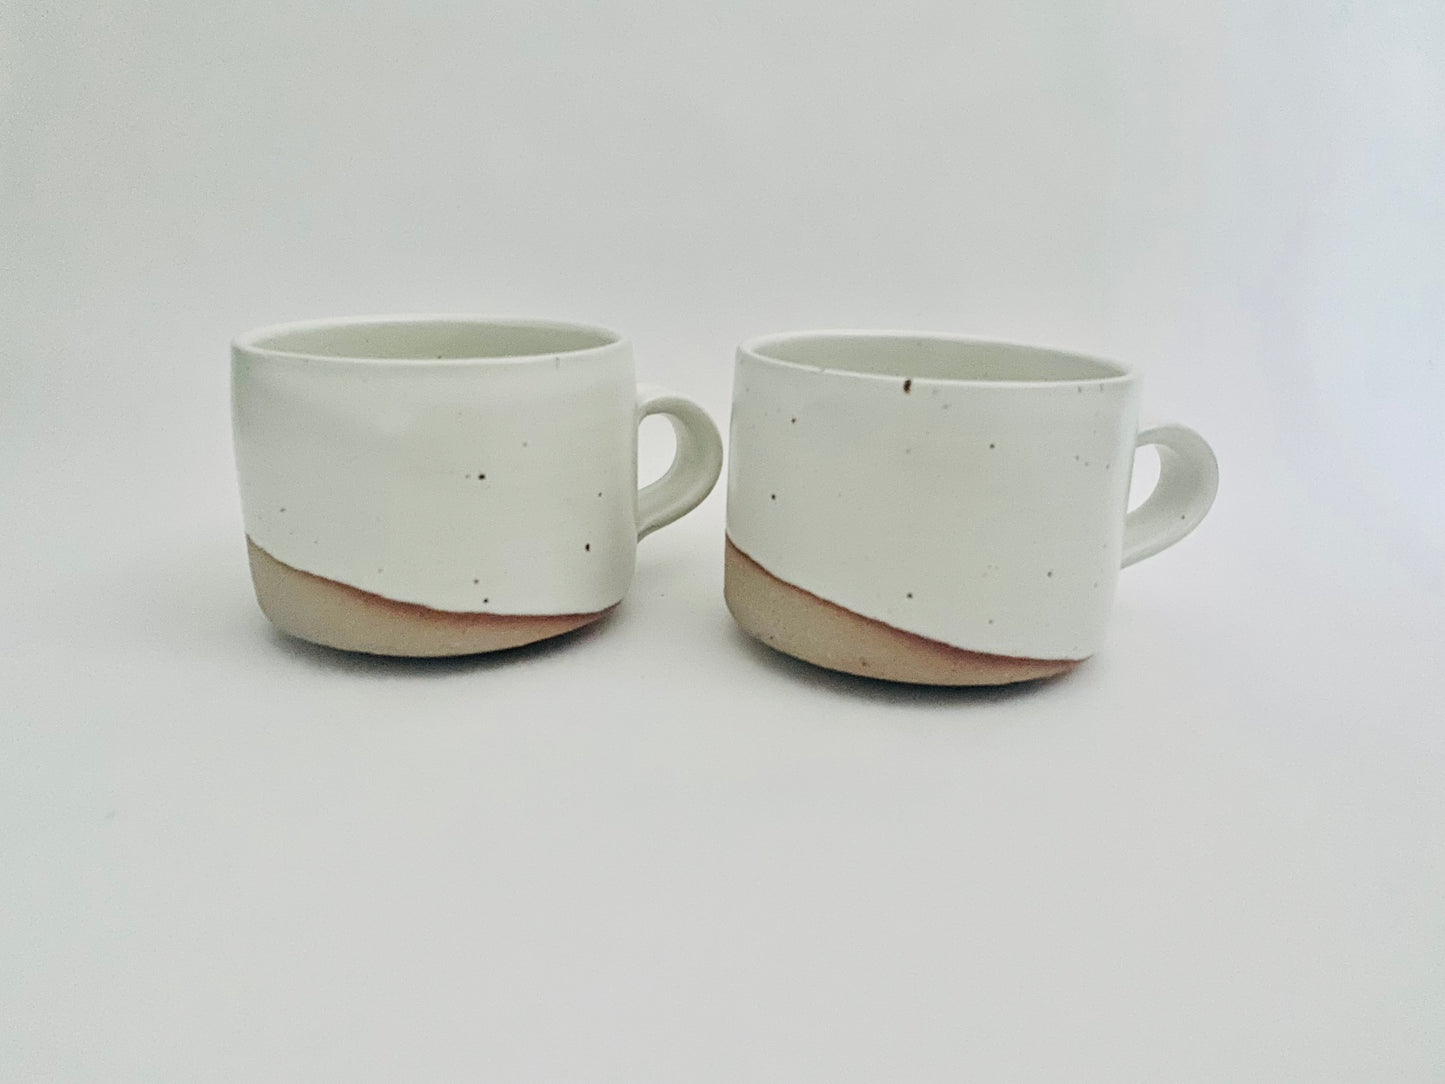 A pair of stoneware mugs